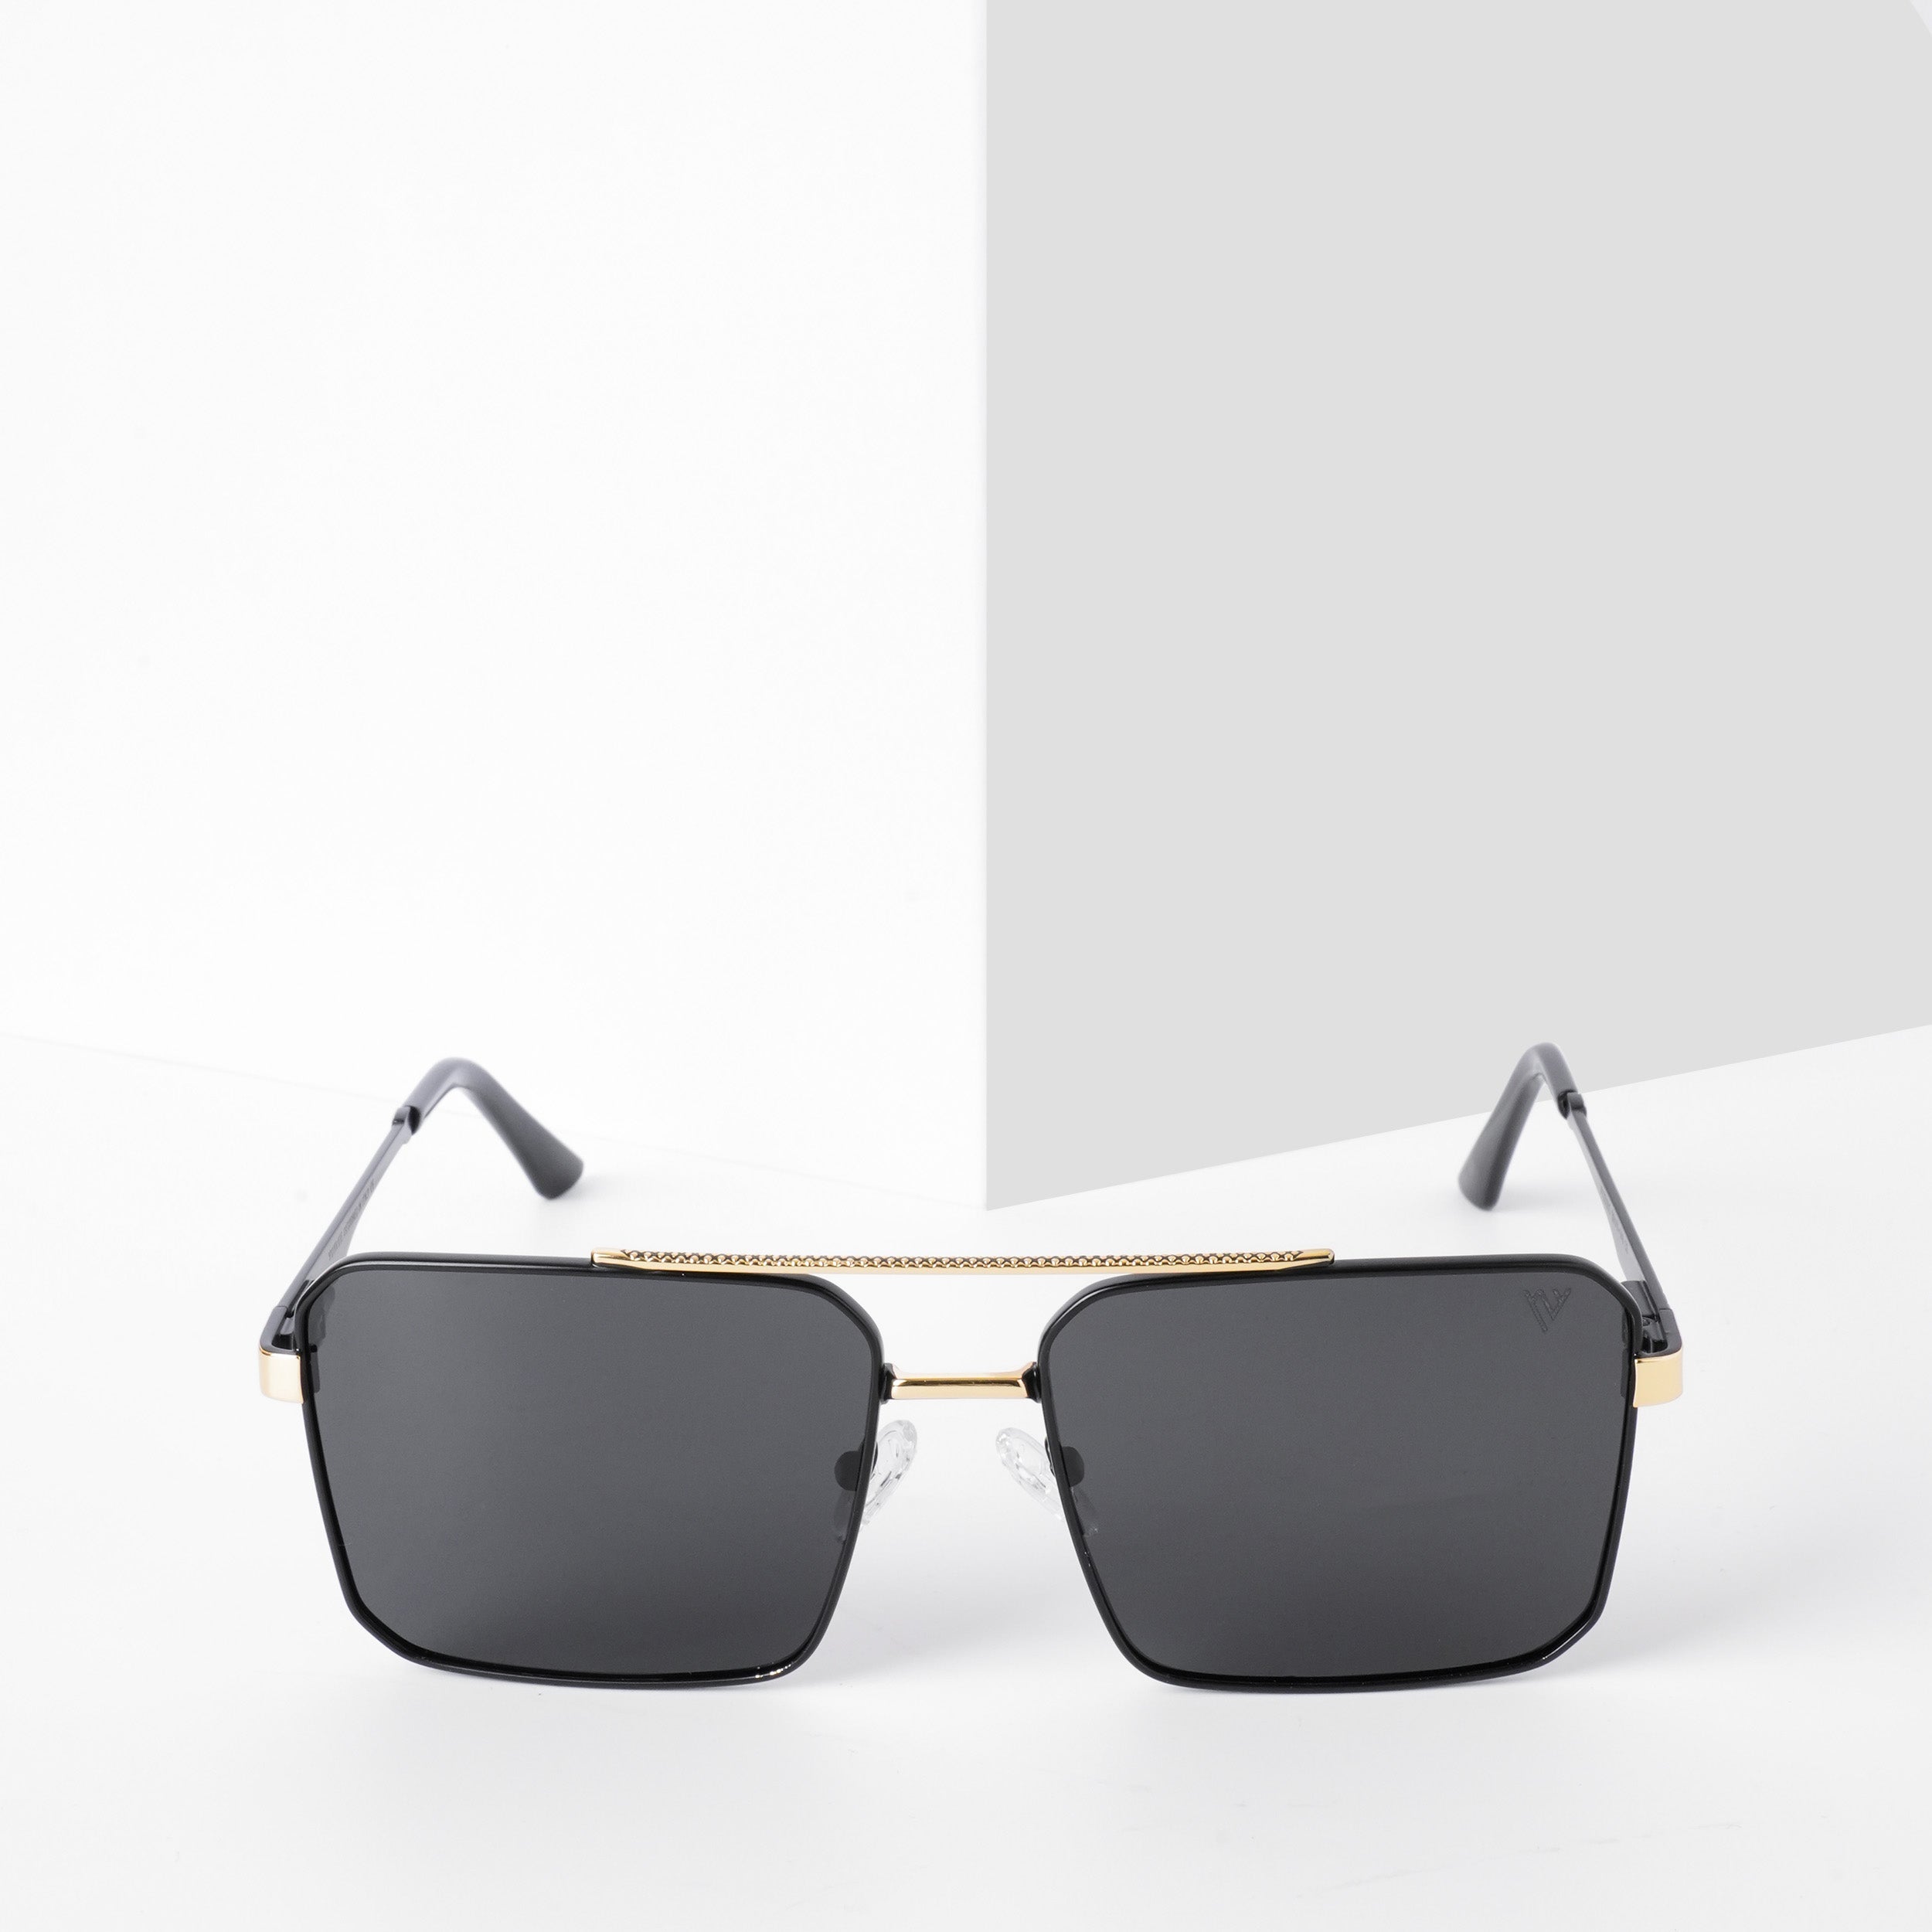 Voyage Exclusive Wayfarer Polarized Sunglasses for Men & Women (Black Lens | Black & Golden Frame - PMG5308)